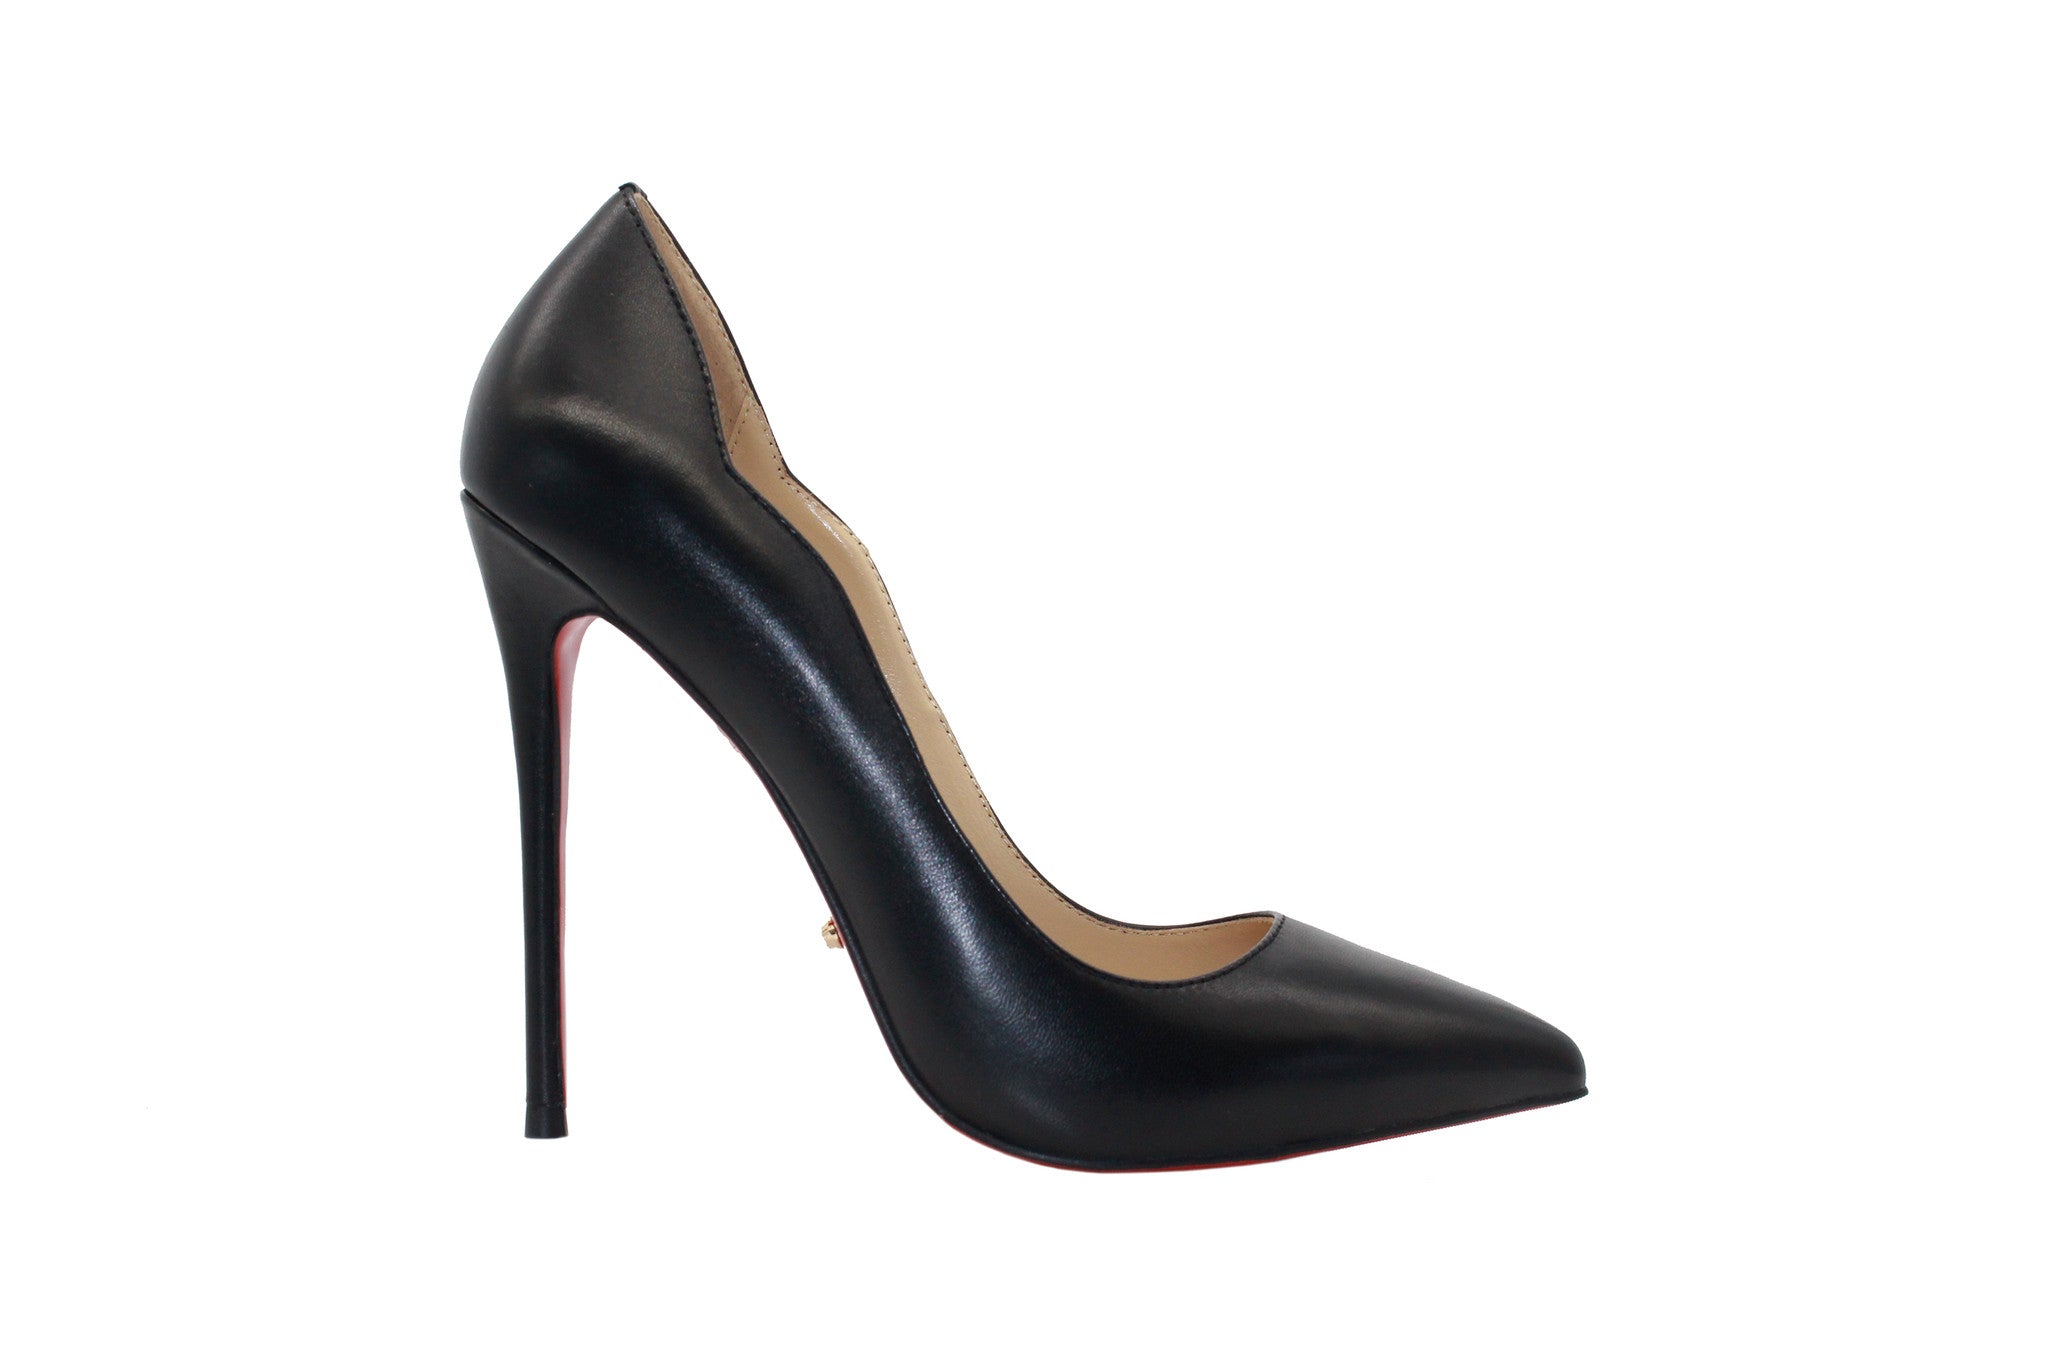 5 inch black heels